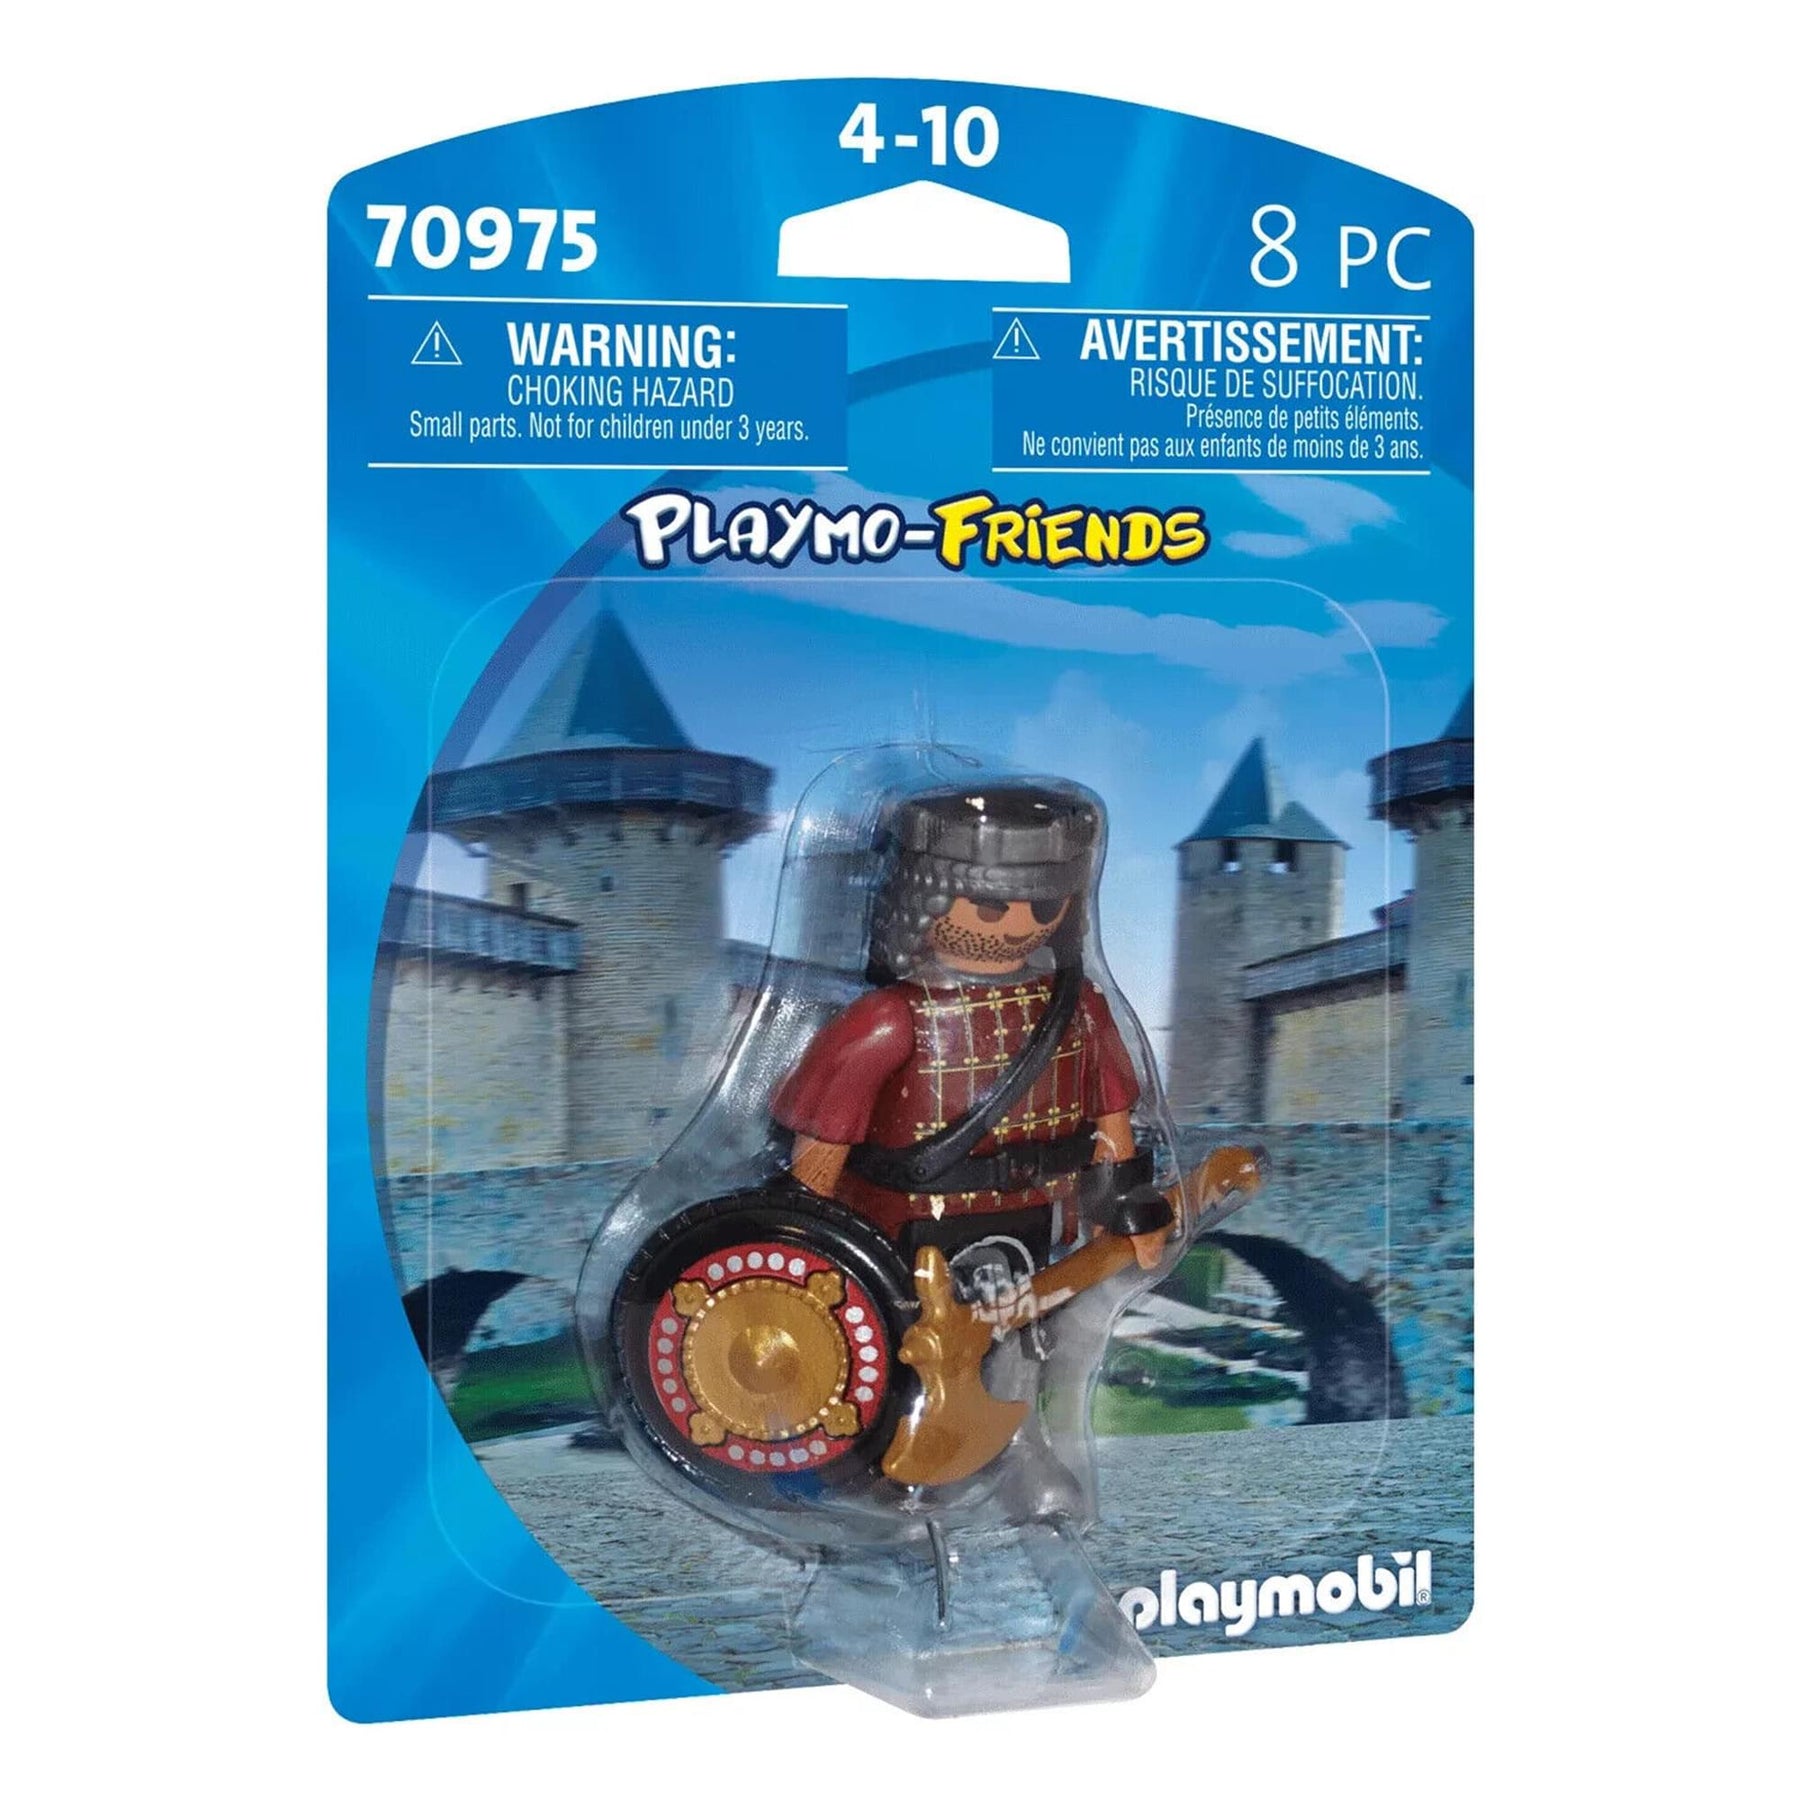 Playmobil 70975 Playmo-Friends Barbarian Figure